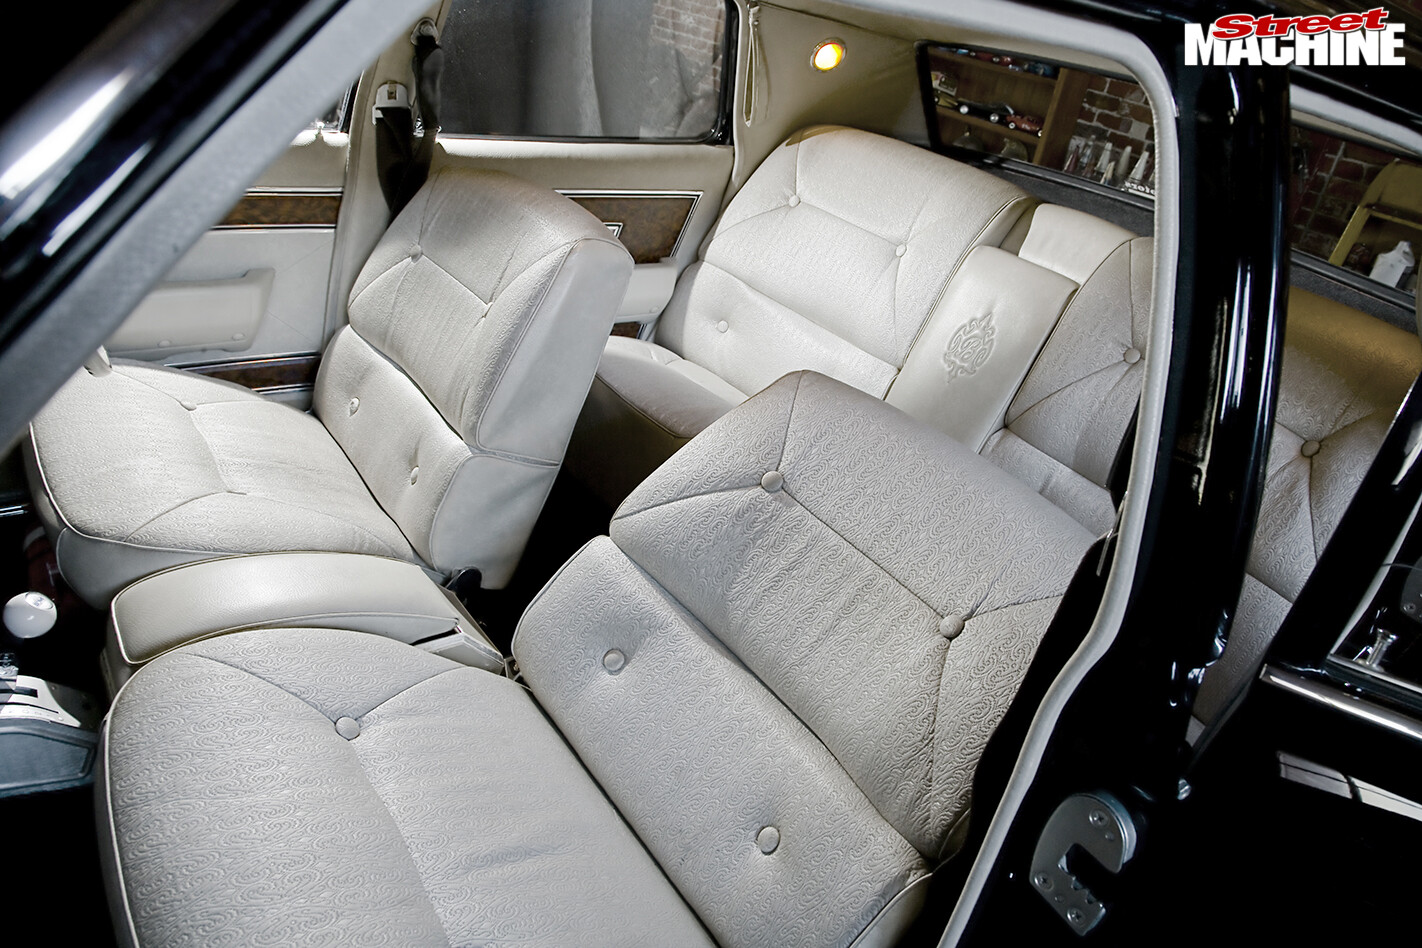 Holden -Brougham -interior -seats